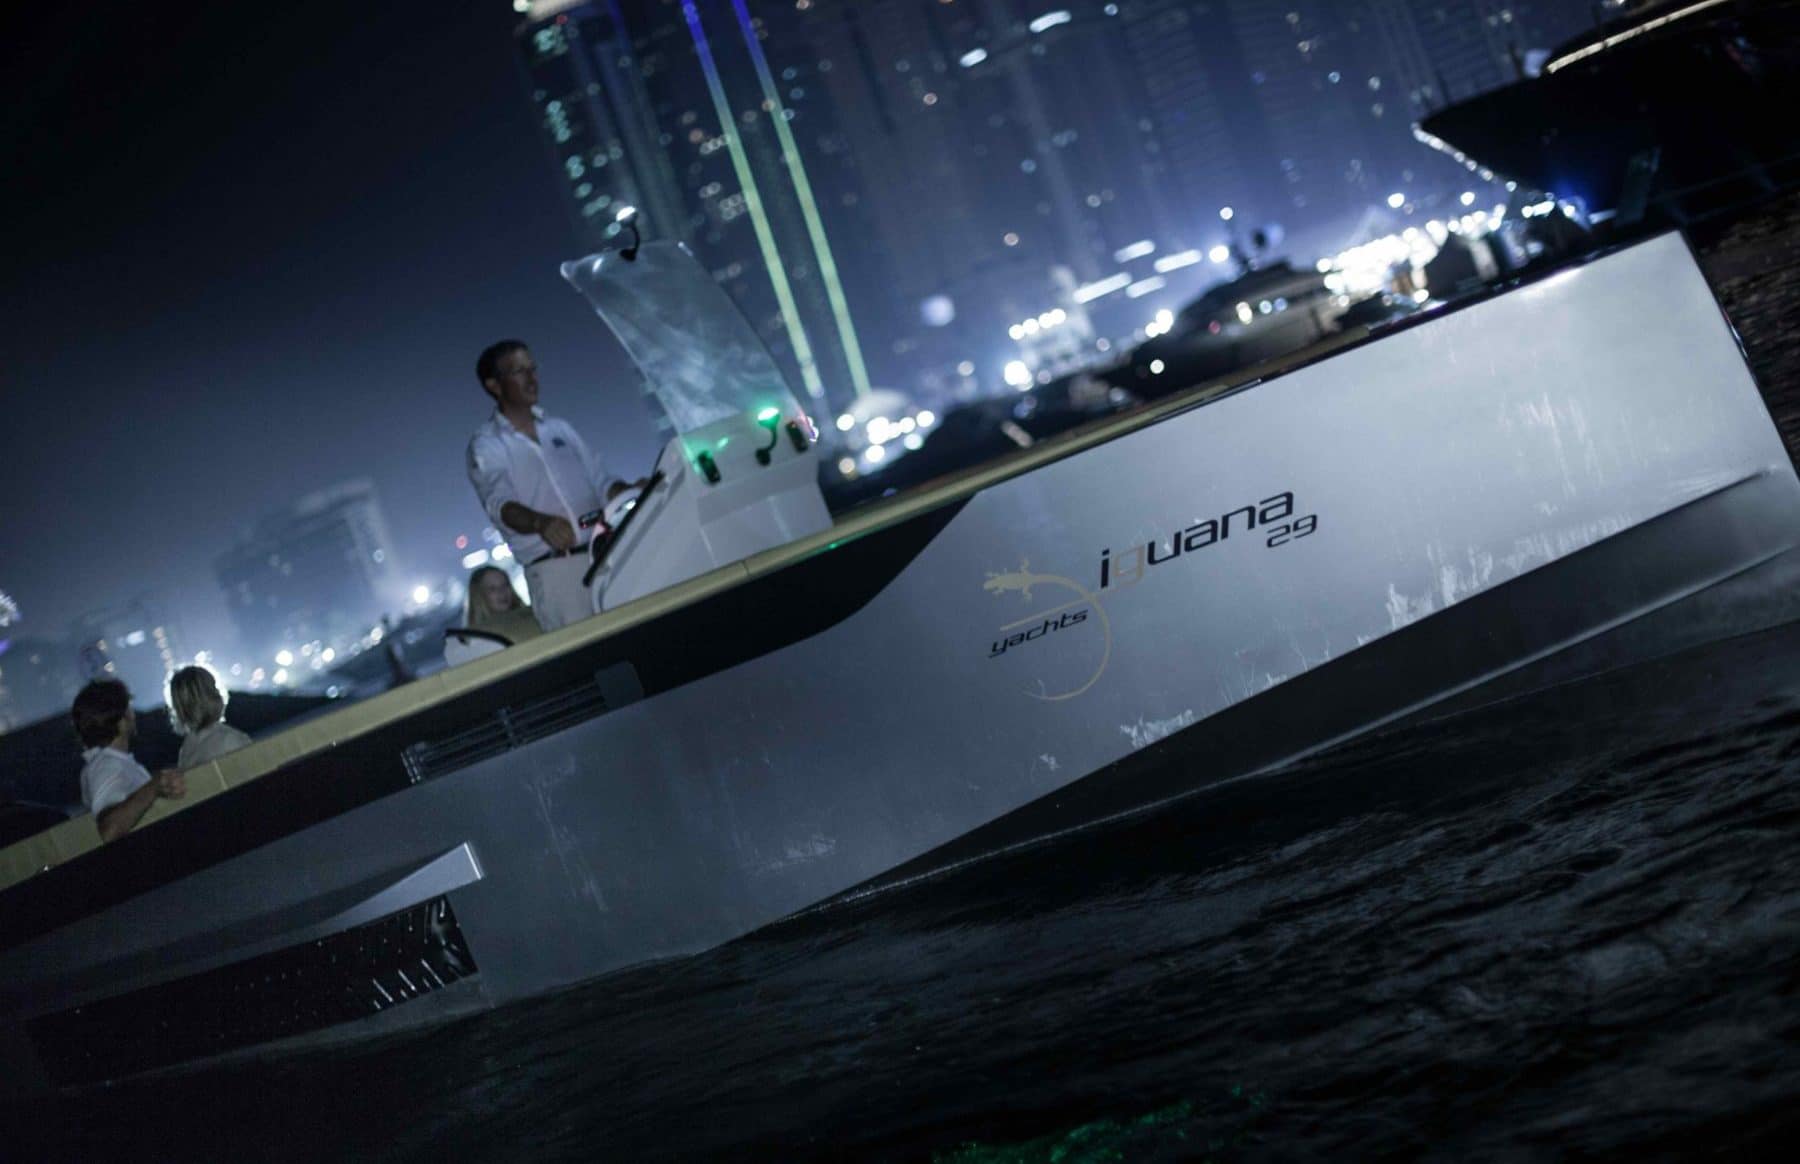 Night sailing aboard the Iguana Original in Dubai